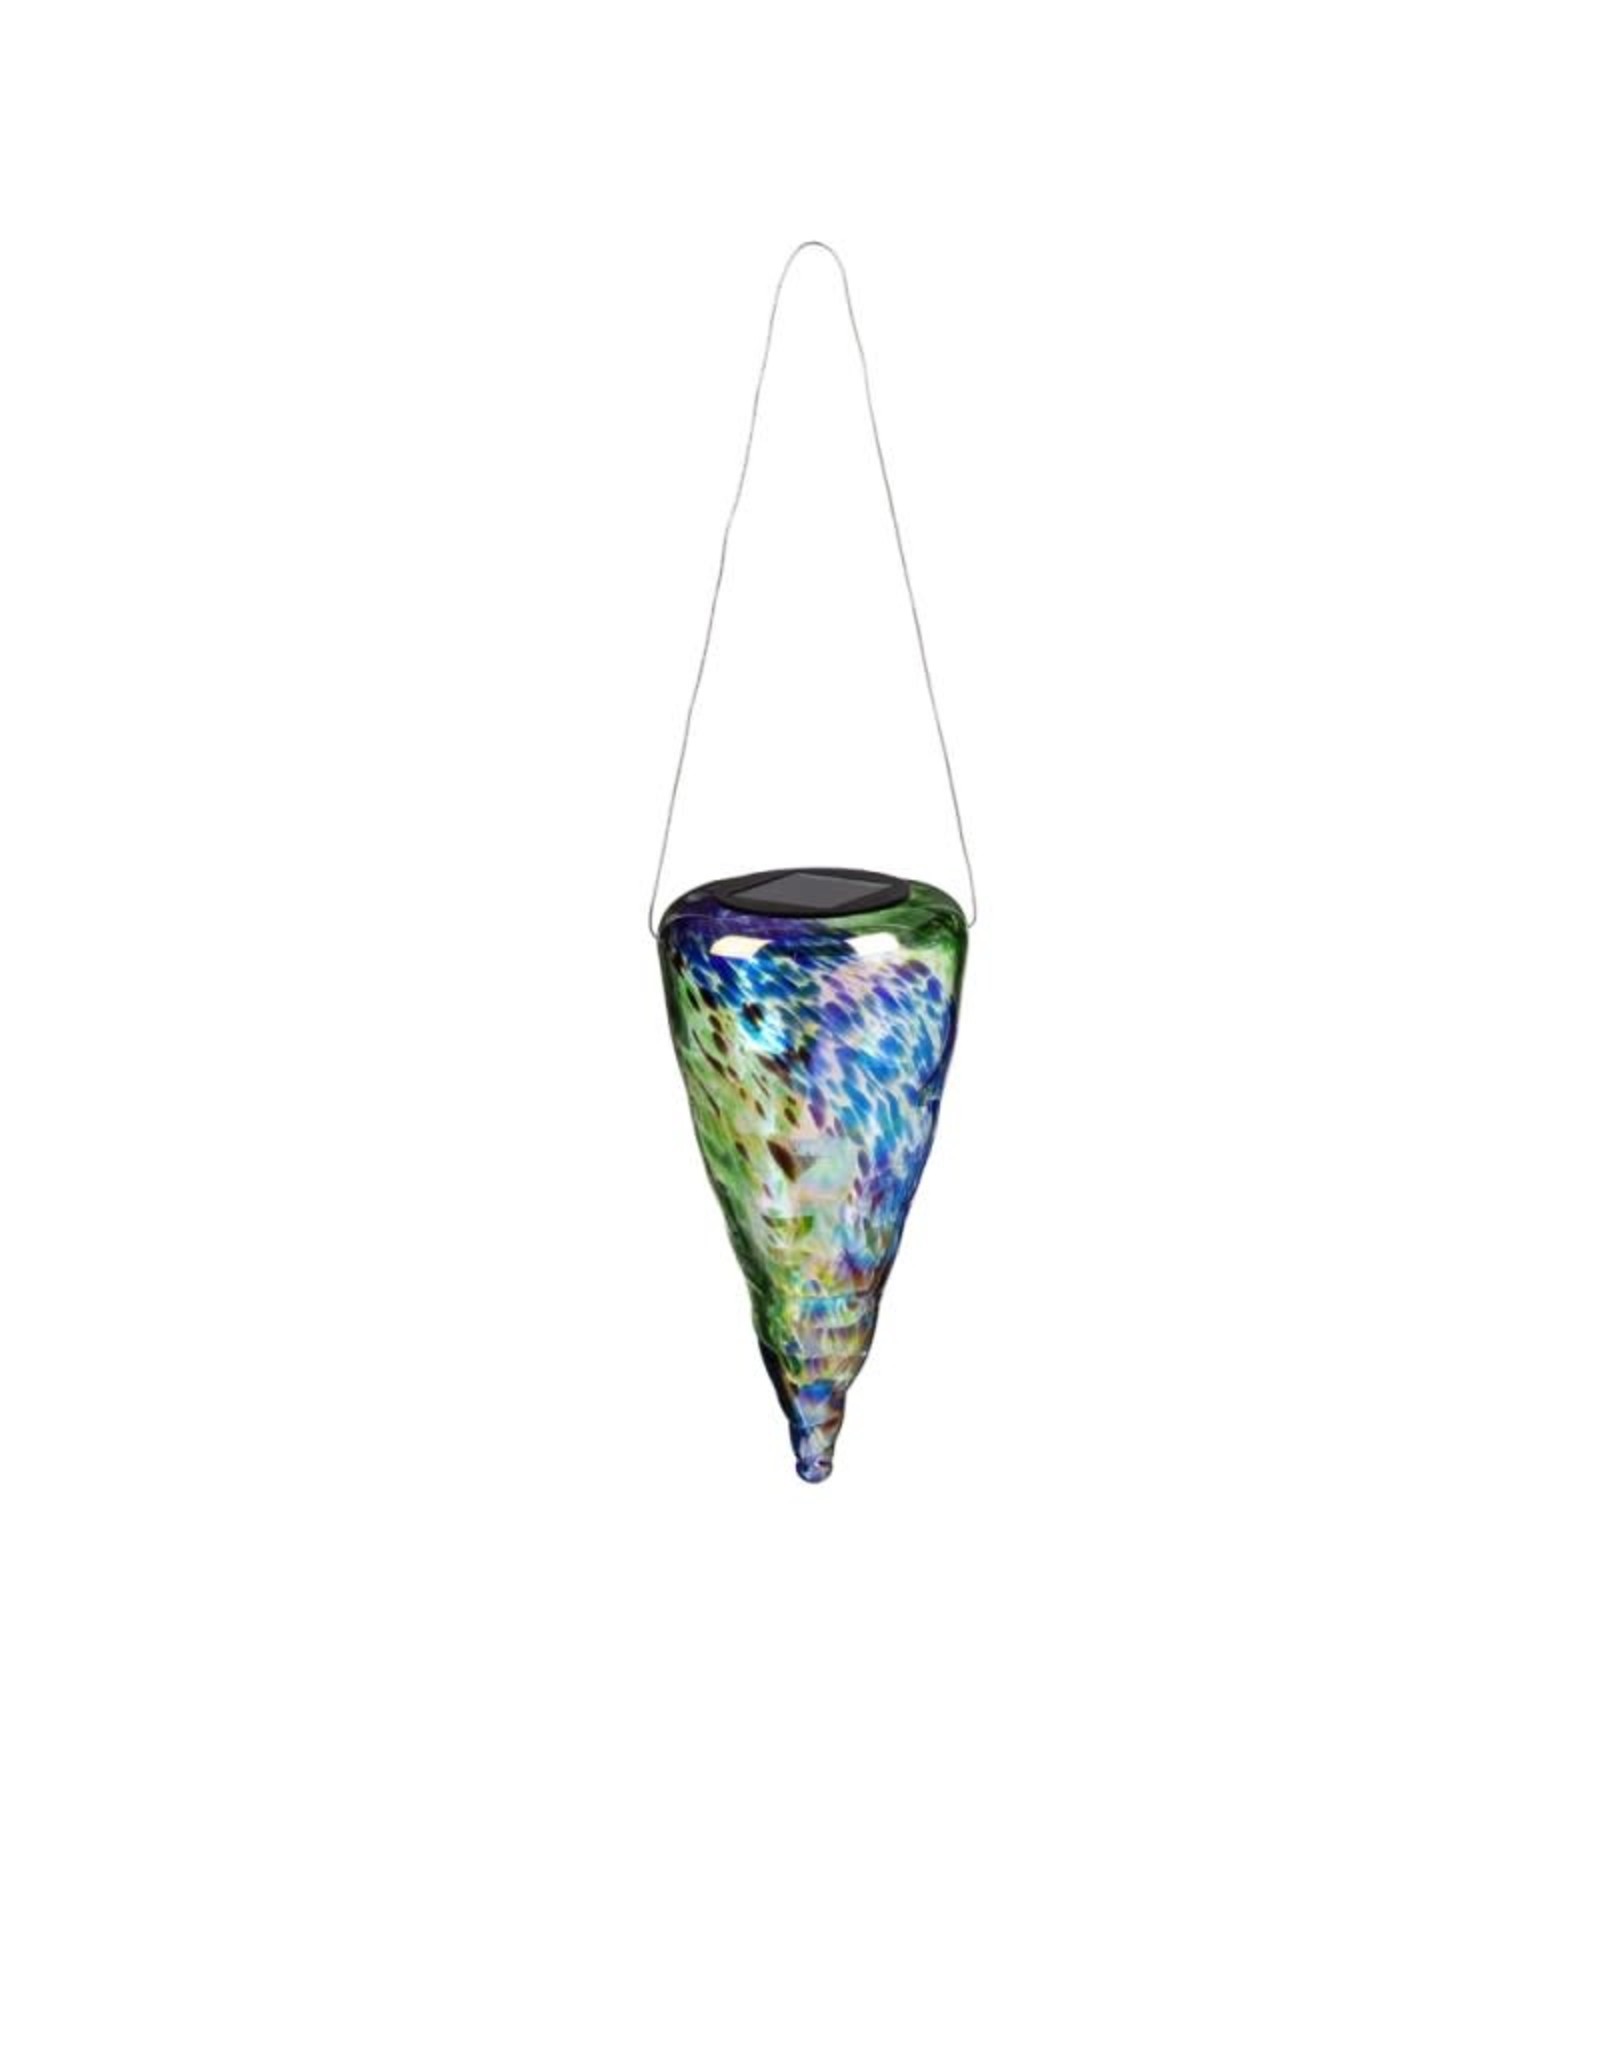 Solar Hanging Lantern - Blue/Green Art Glass